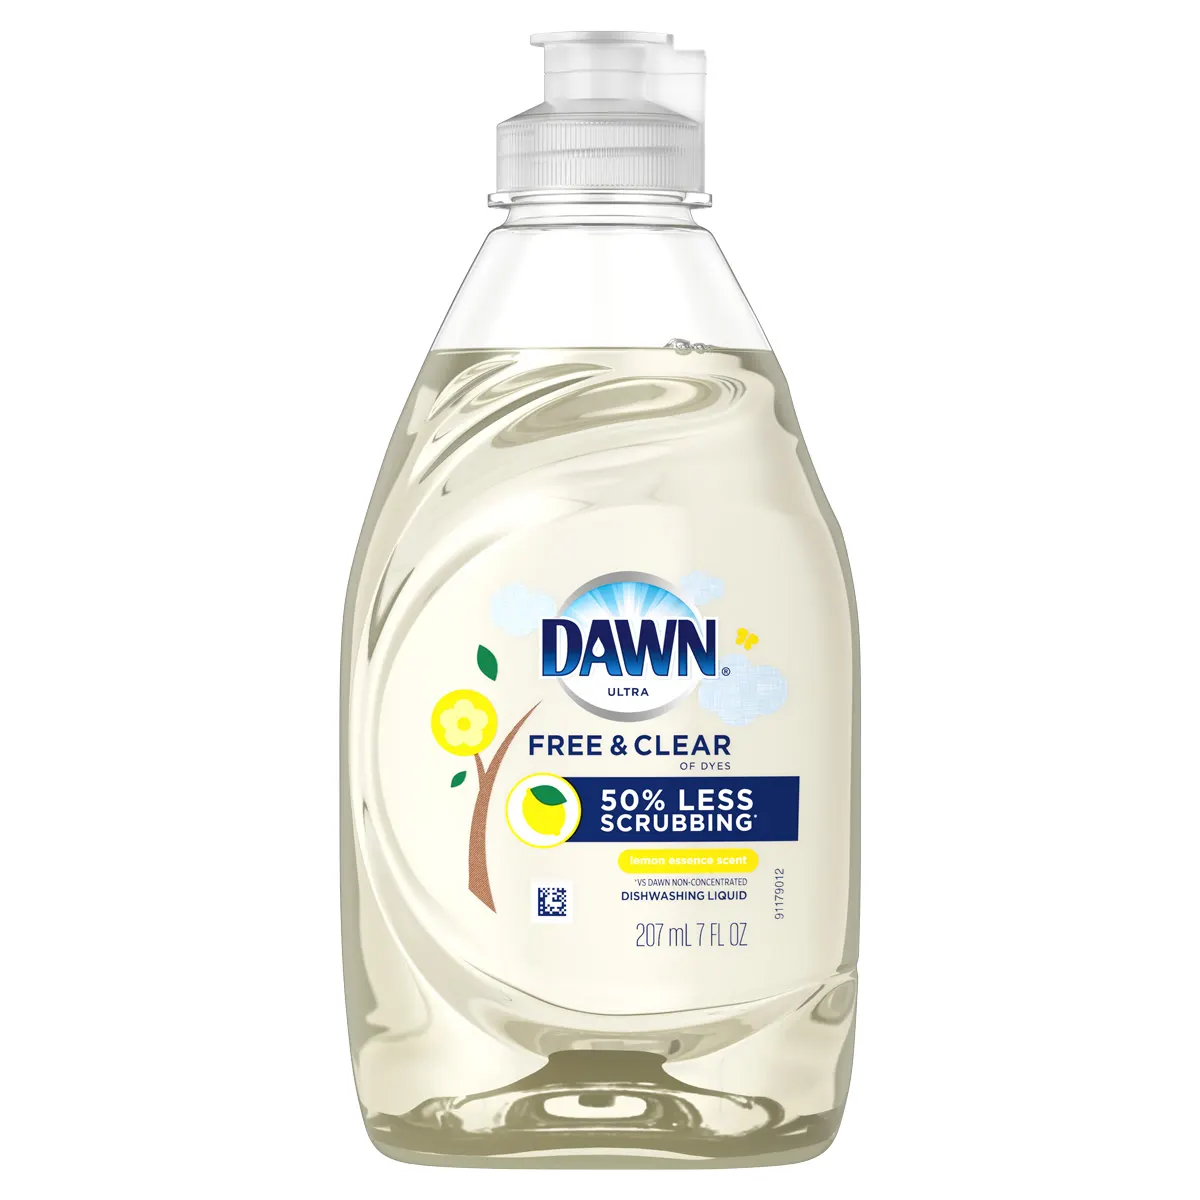 Dawn Free & Clear Dishwashing Liquid, Lemon Essence 7 oz